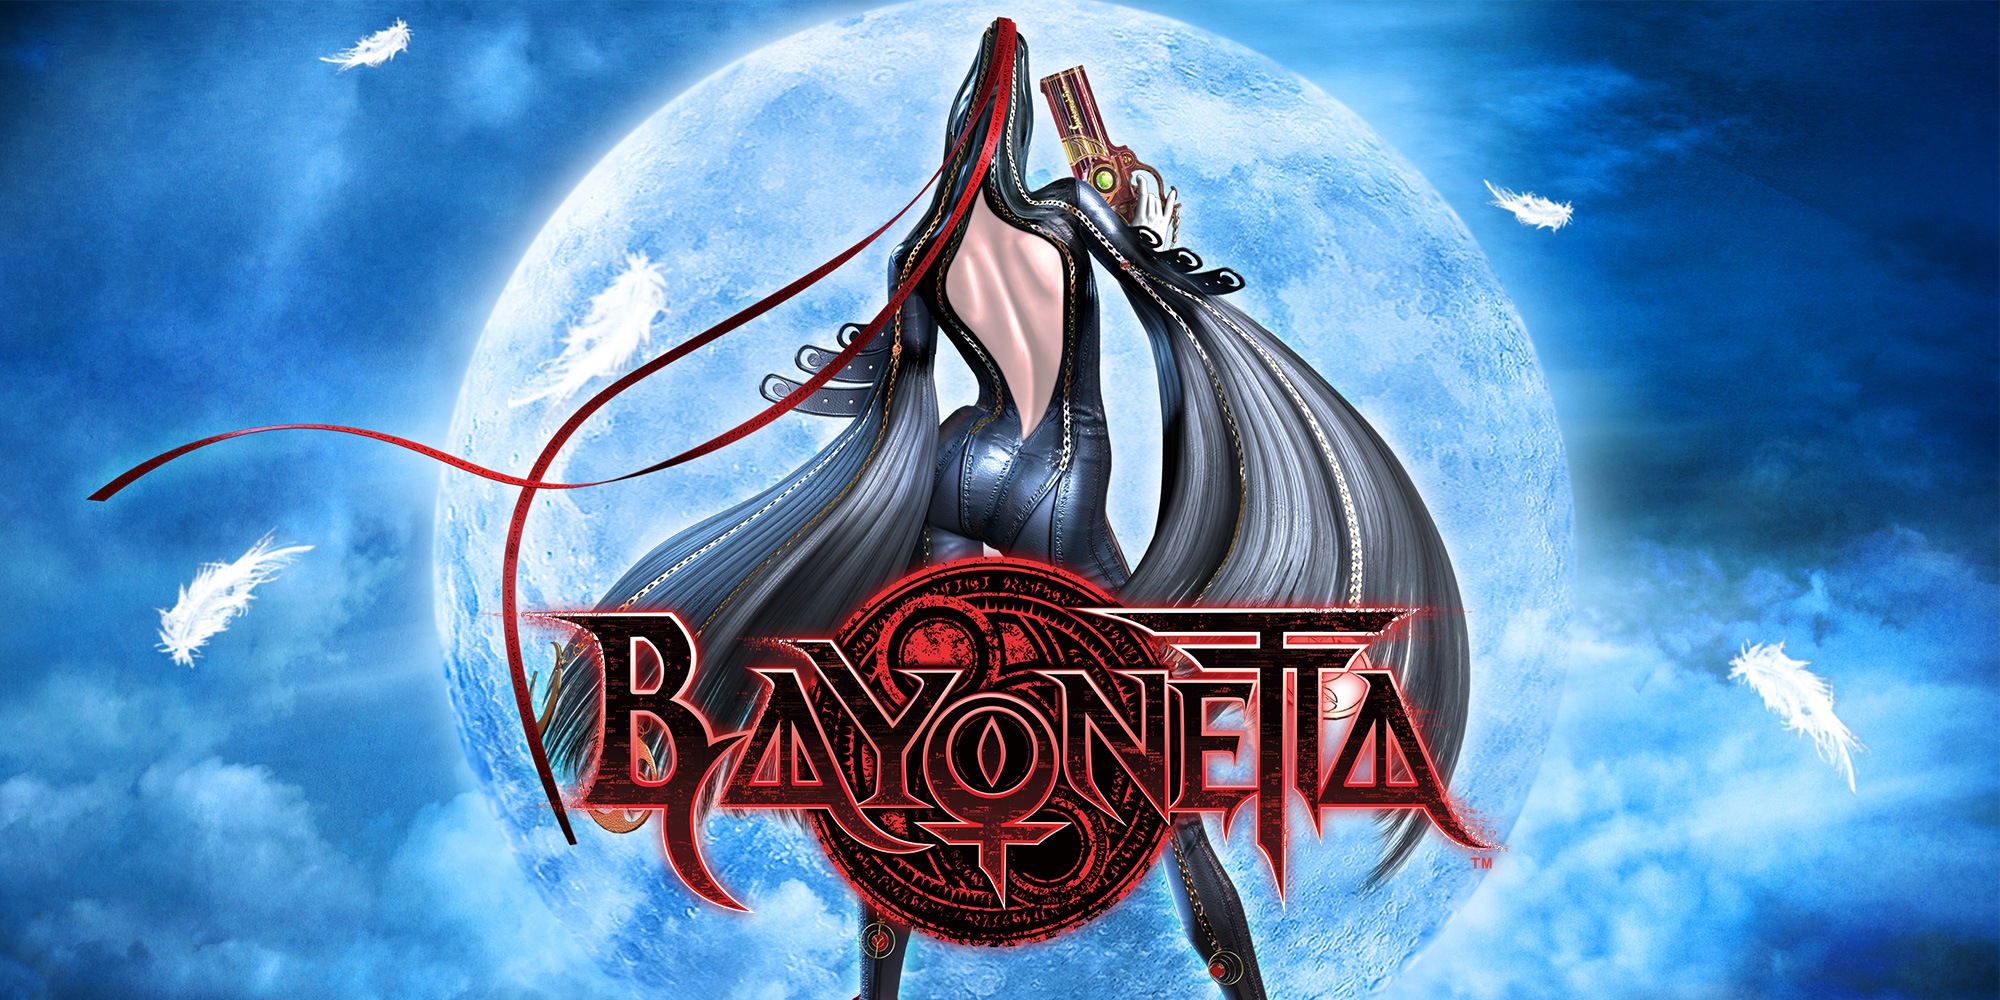  Bayonetta + Vanquish 10th Anniversary Bundle PS4 : Video Games